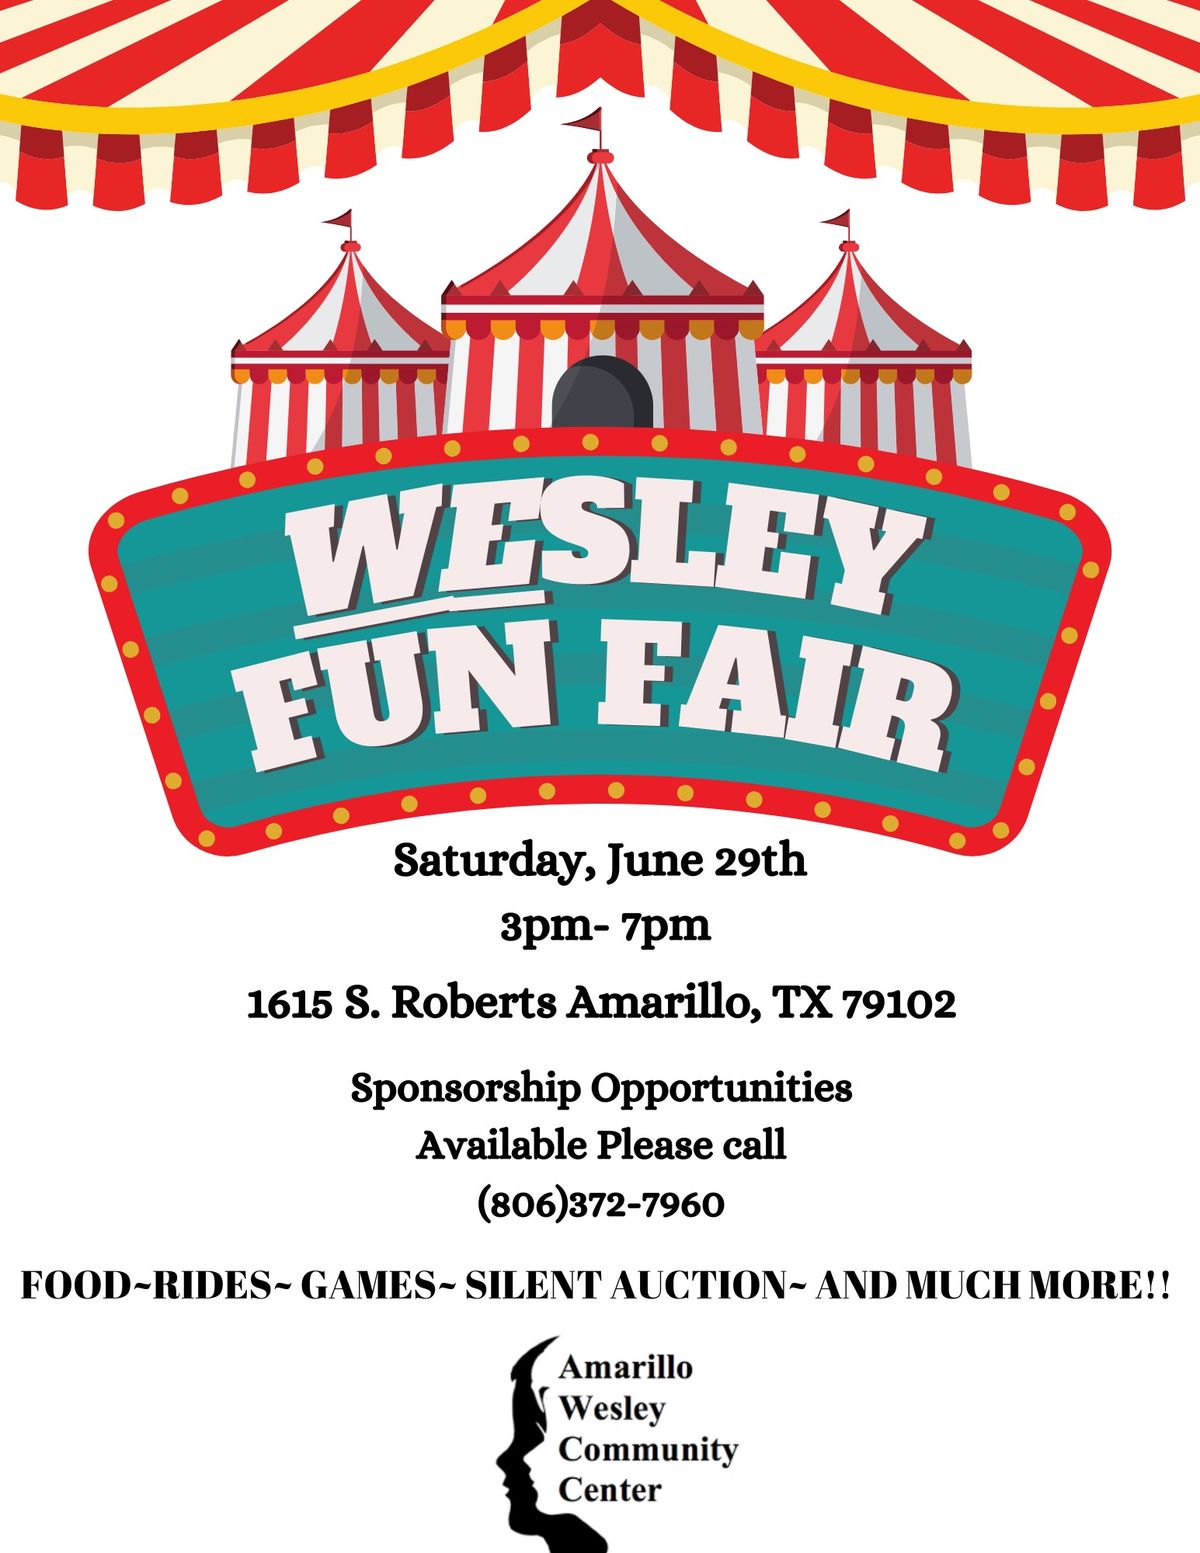 WEsley Fun Fair 